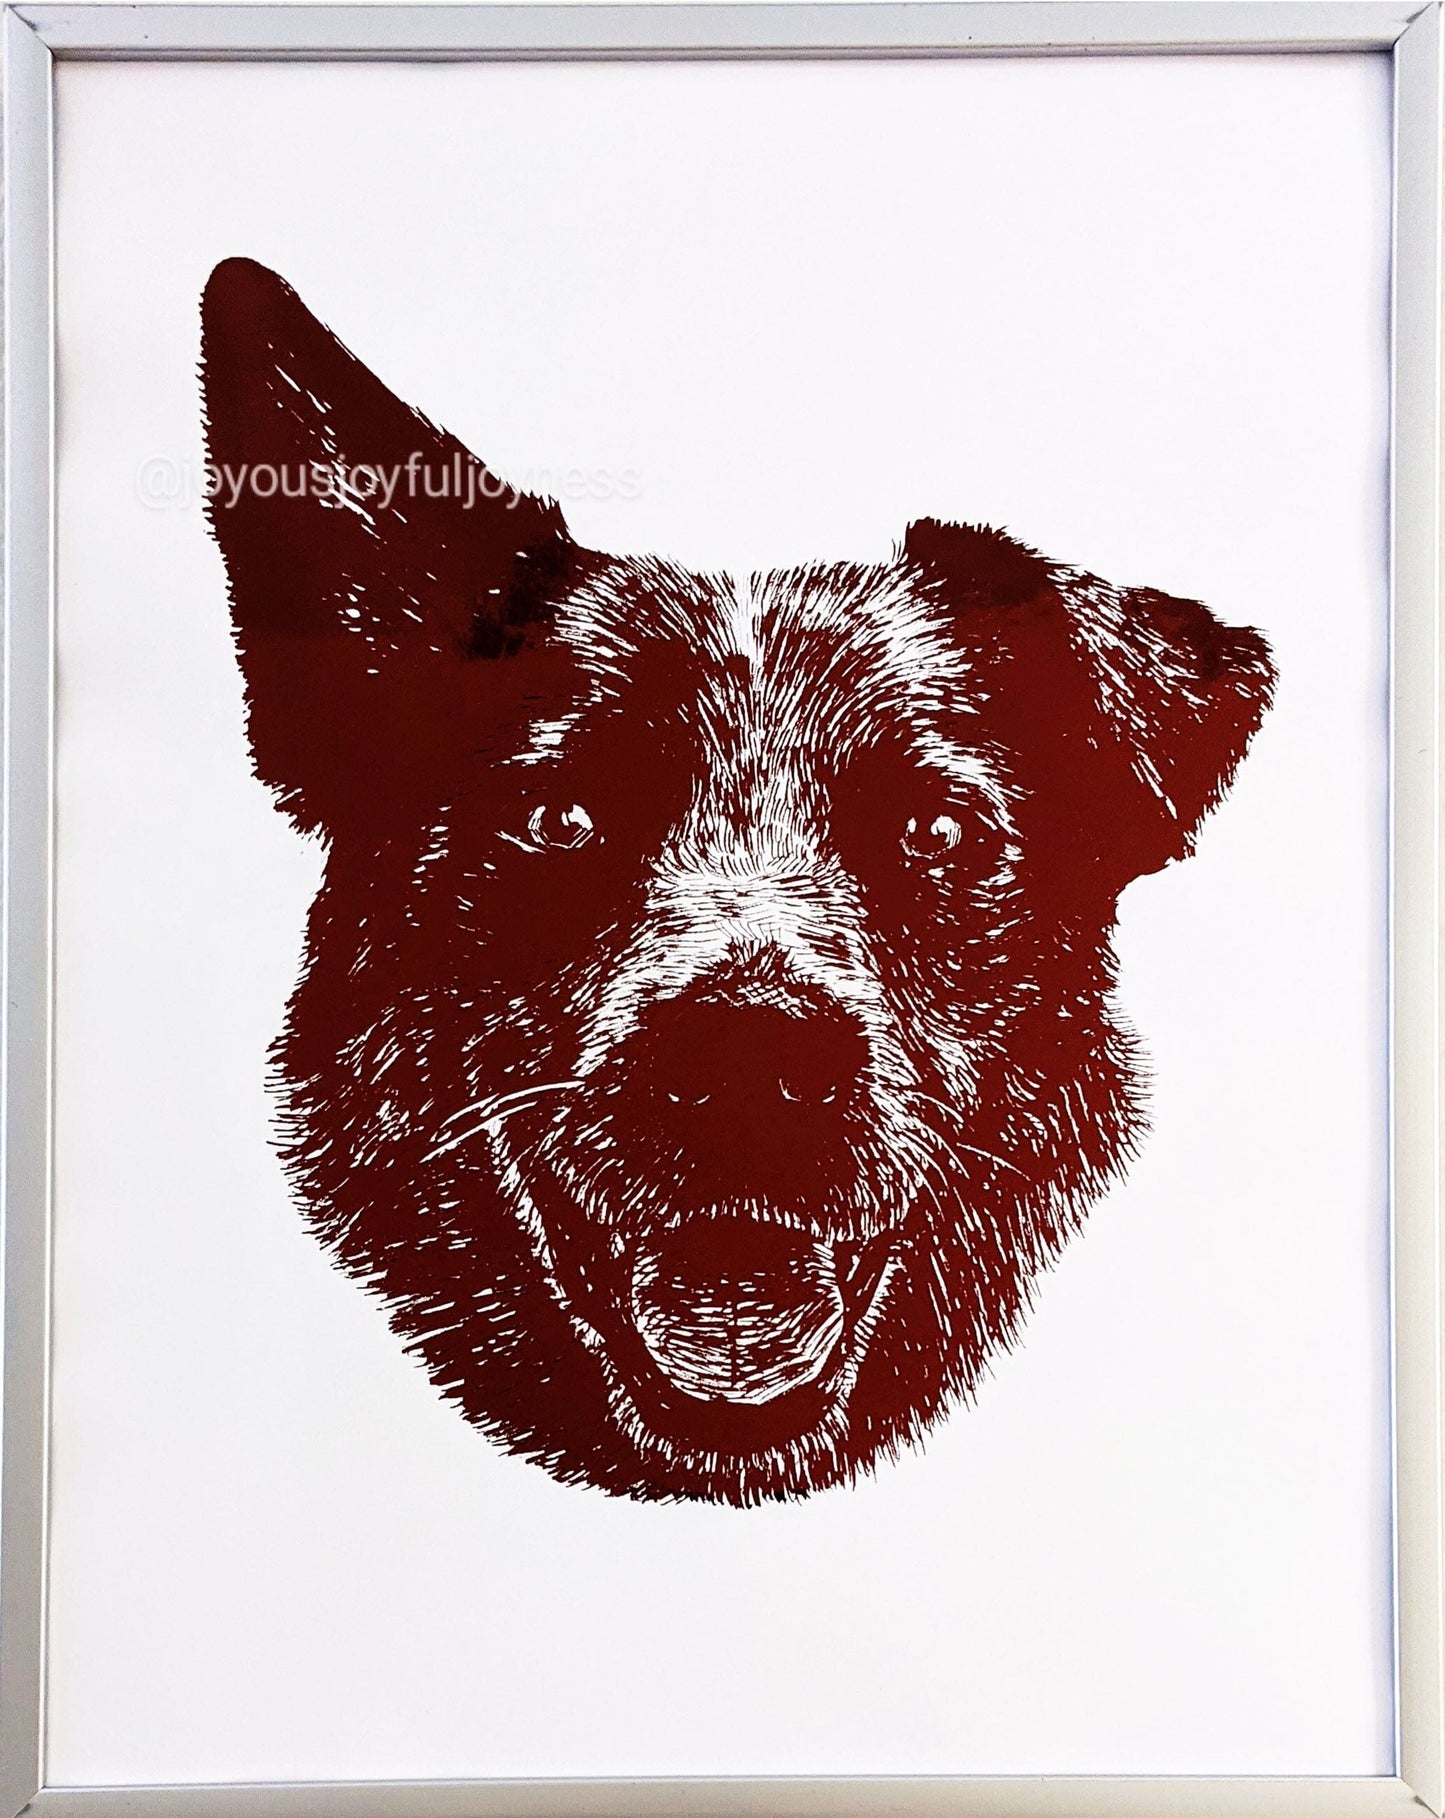 Portfolio: Luna (cattle dog) (Not for sale) Posters, Prints, & Visual Artwork JoyousJoyfulJoyness 